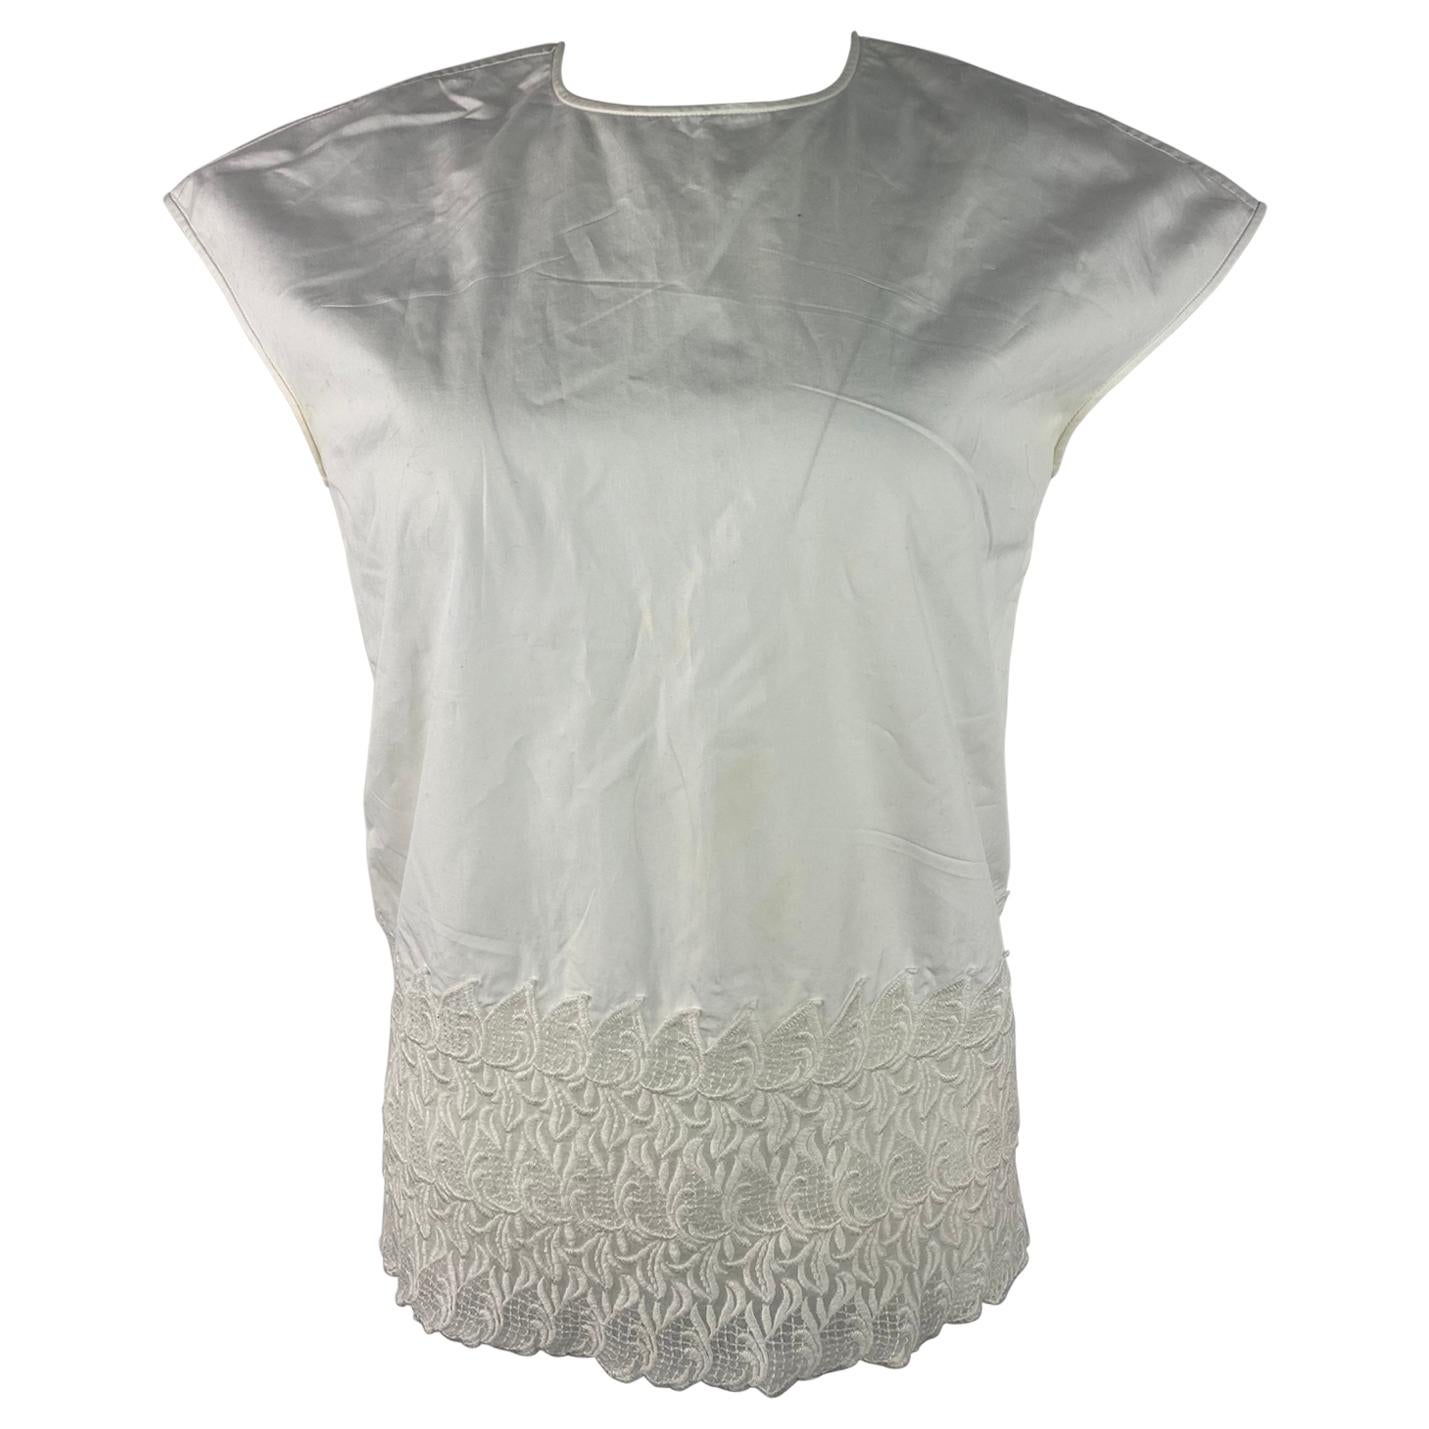 Giambattista Valli White Cotton and Lace Top Blouse, Size 42 / S For Sale